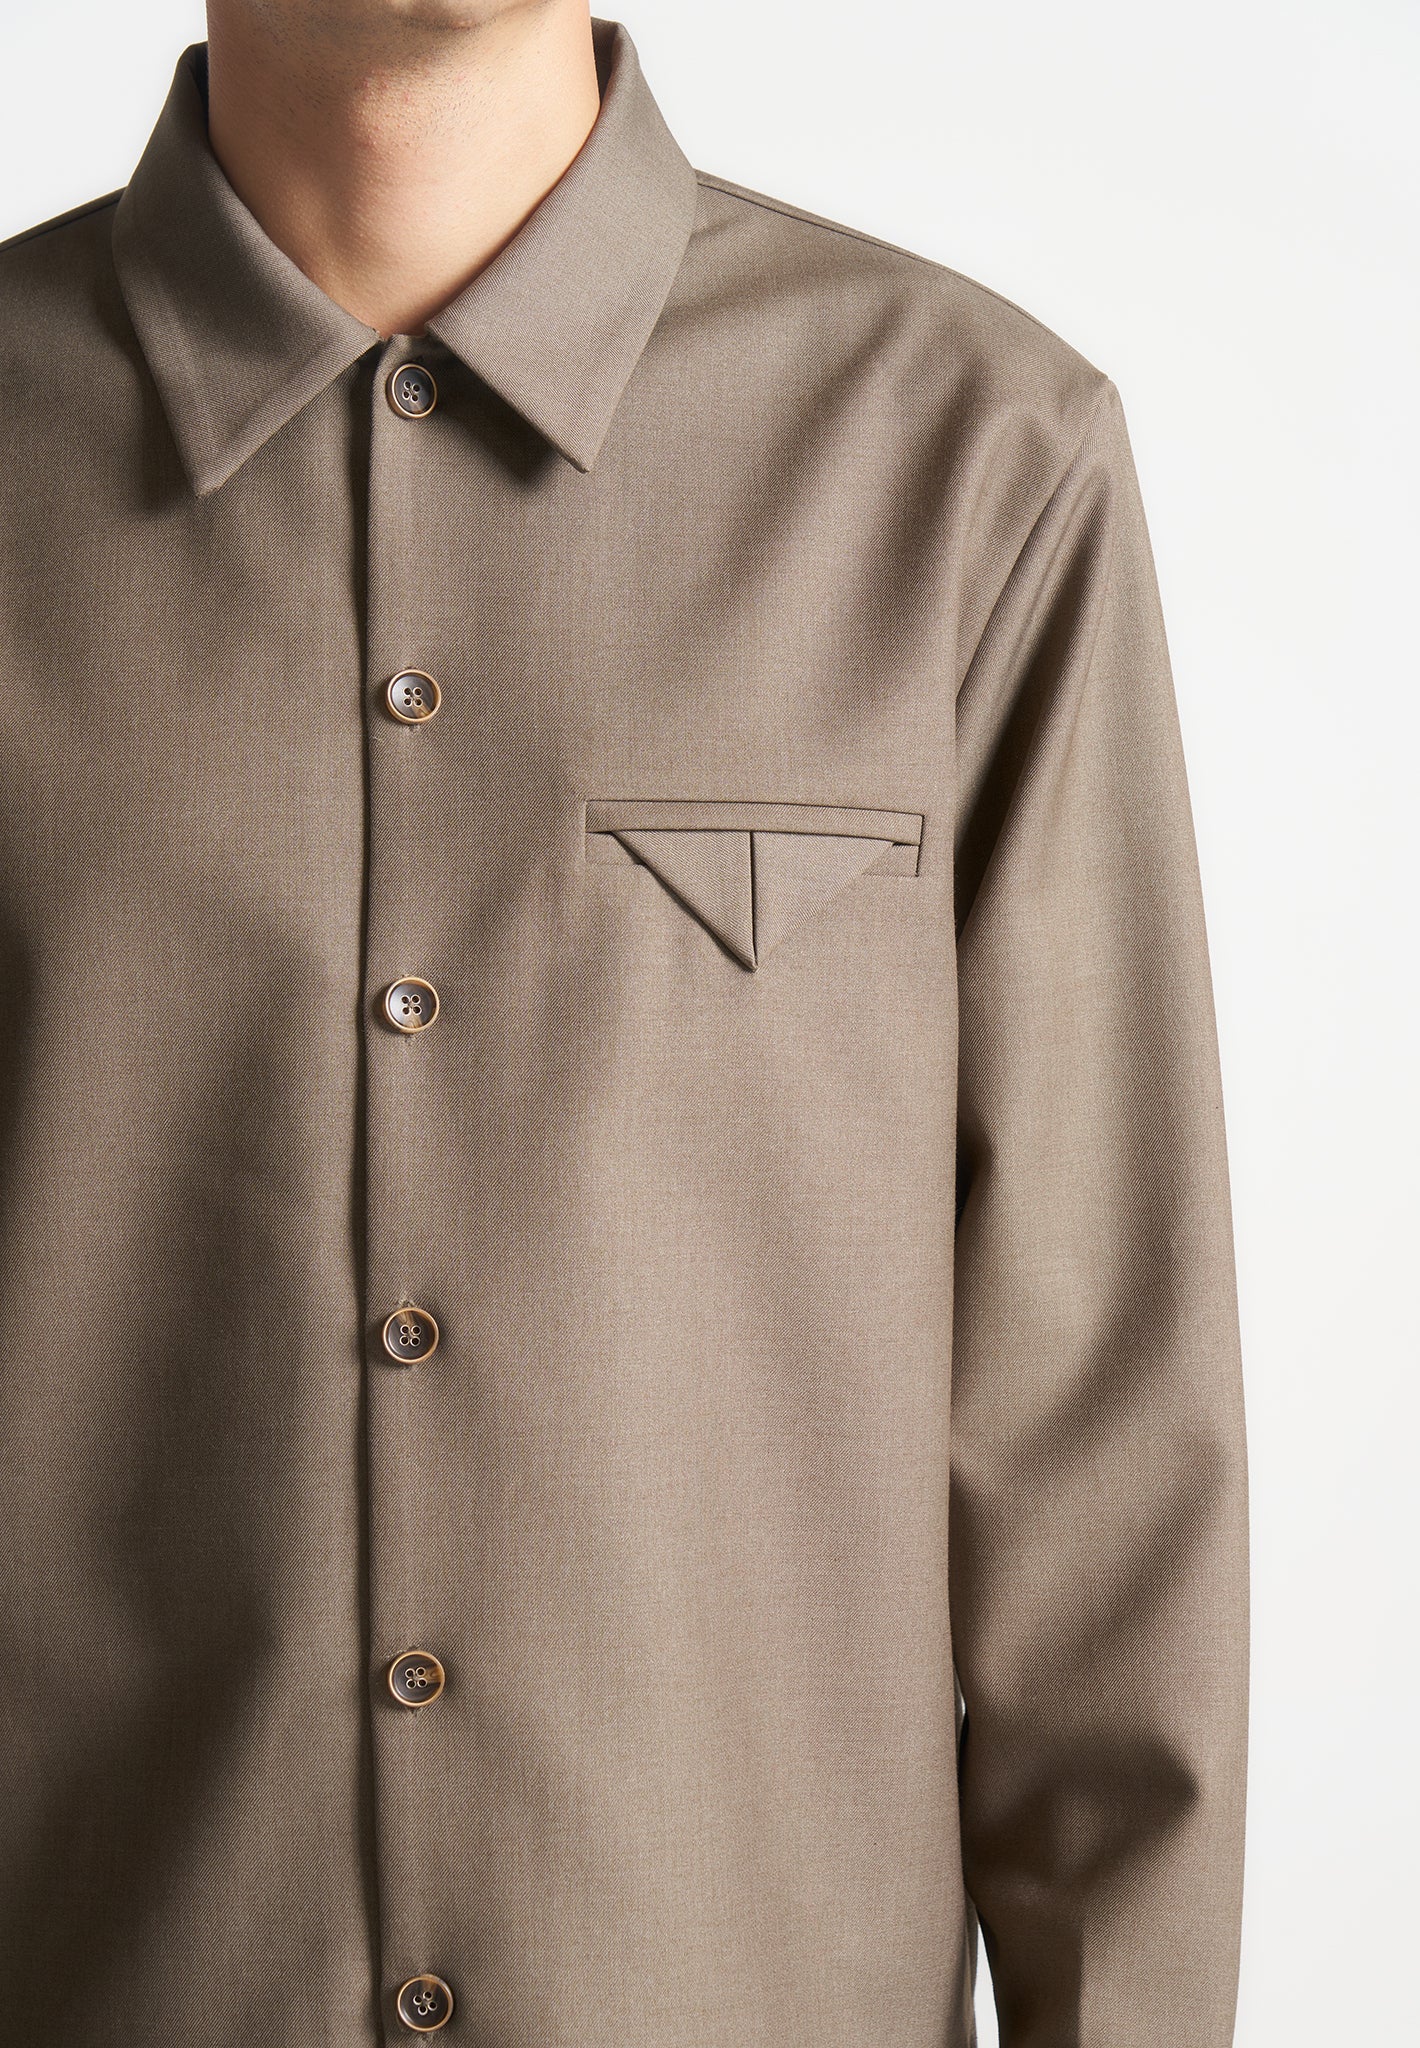 hatched-tailored-long-sleeve-shirt-khaki